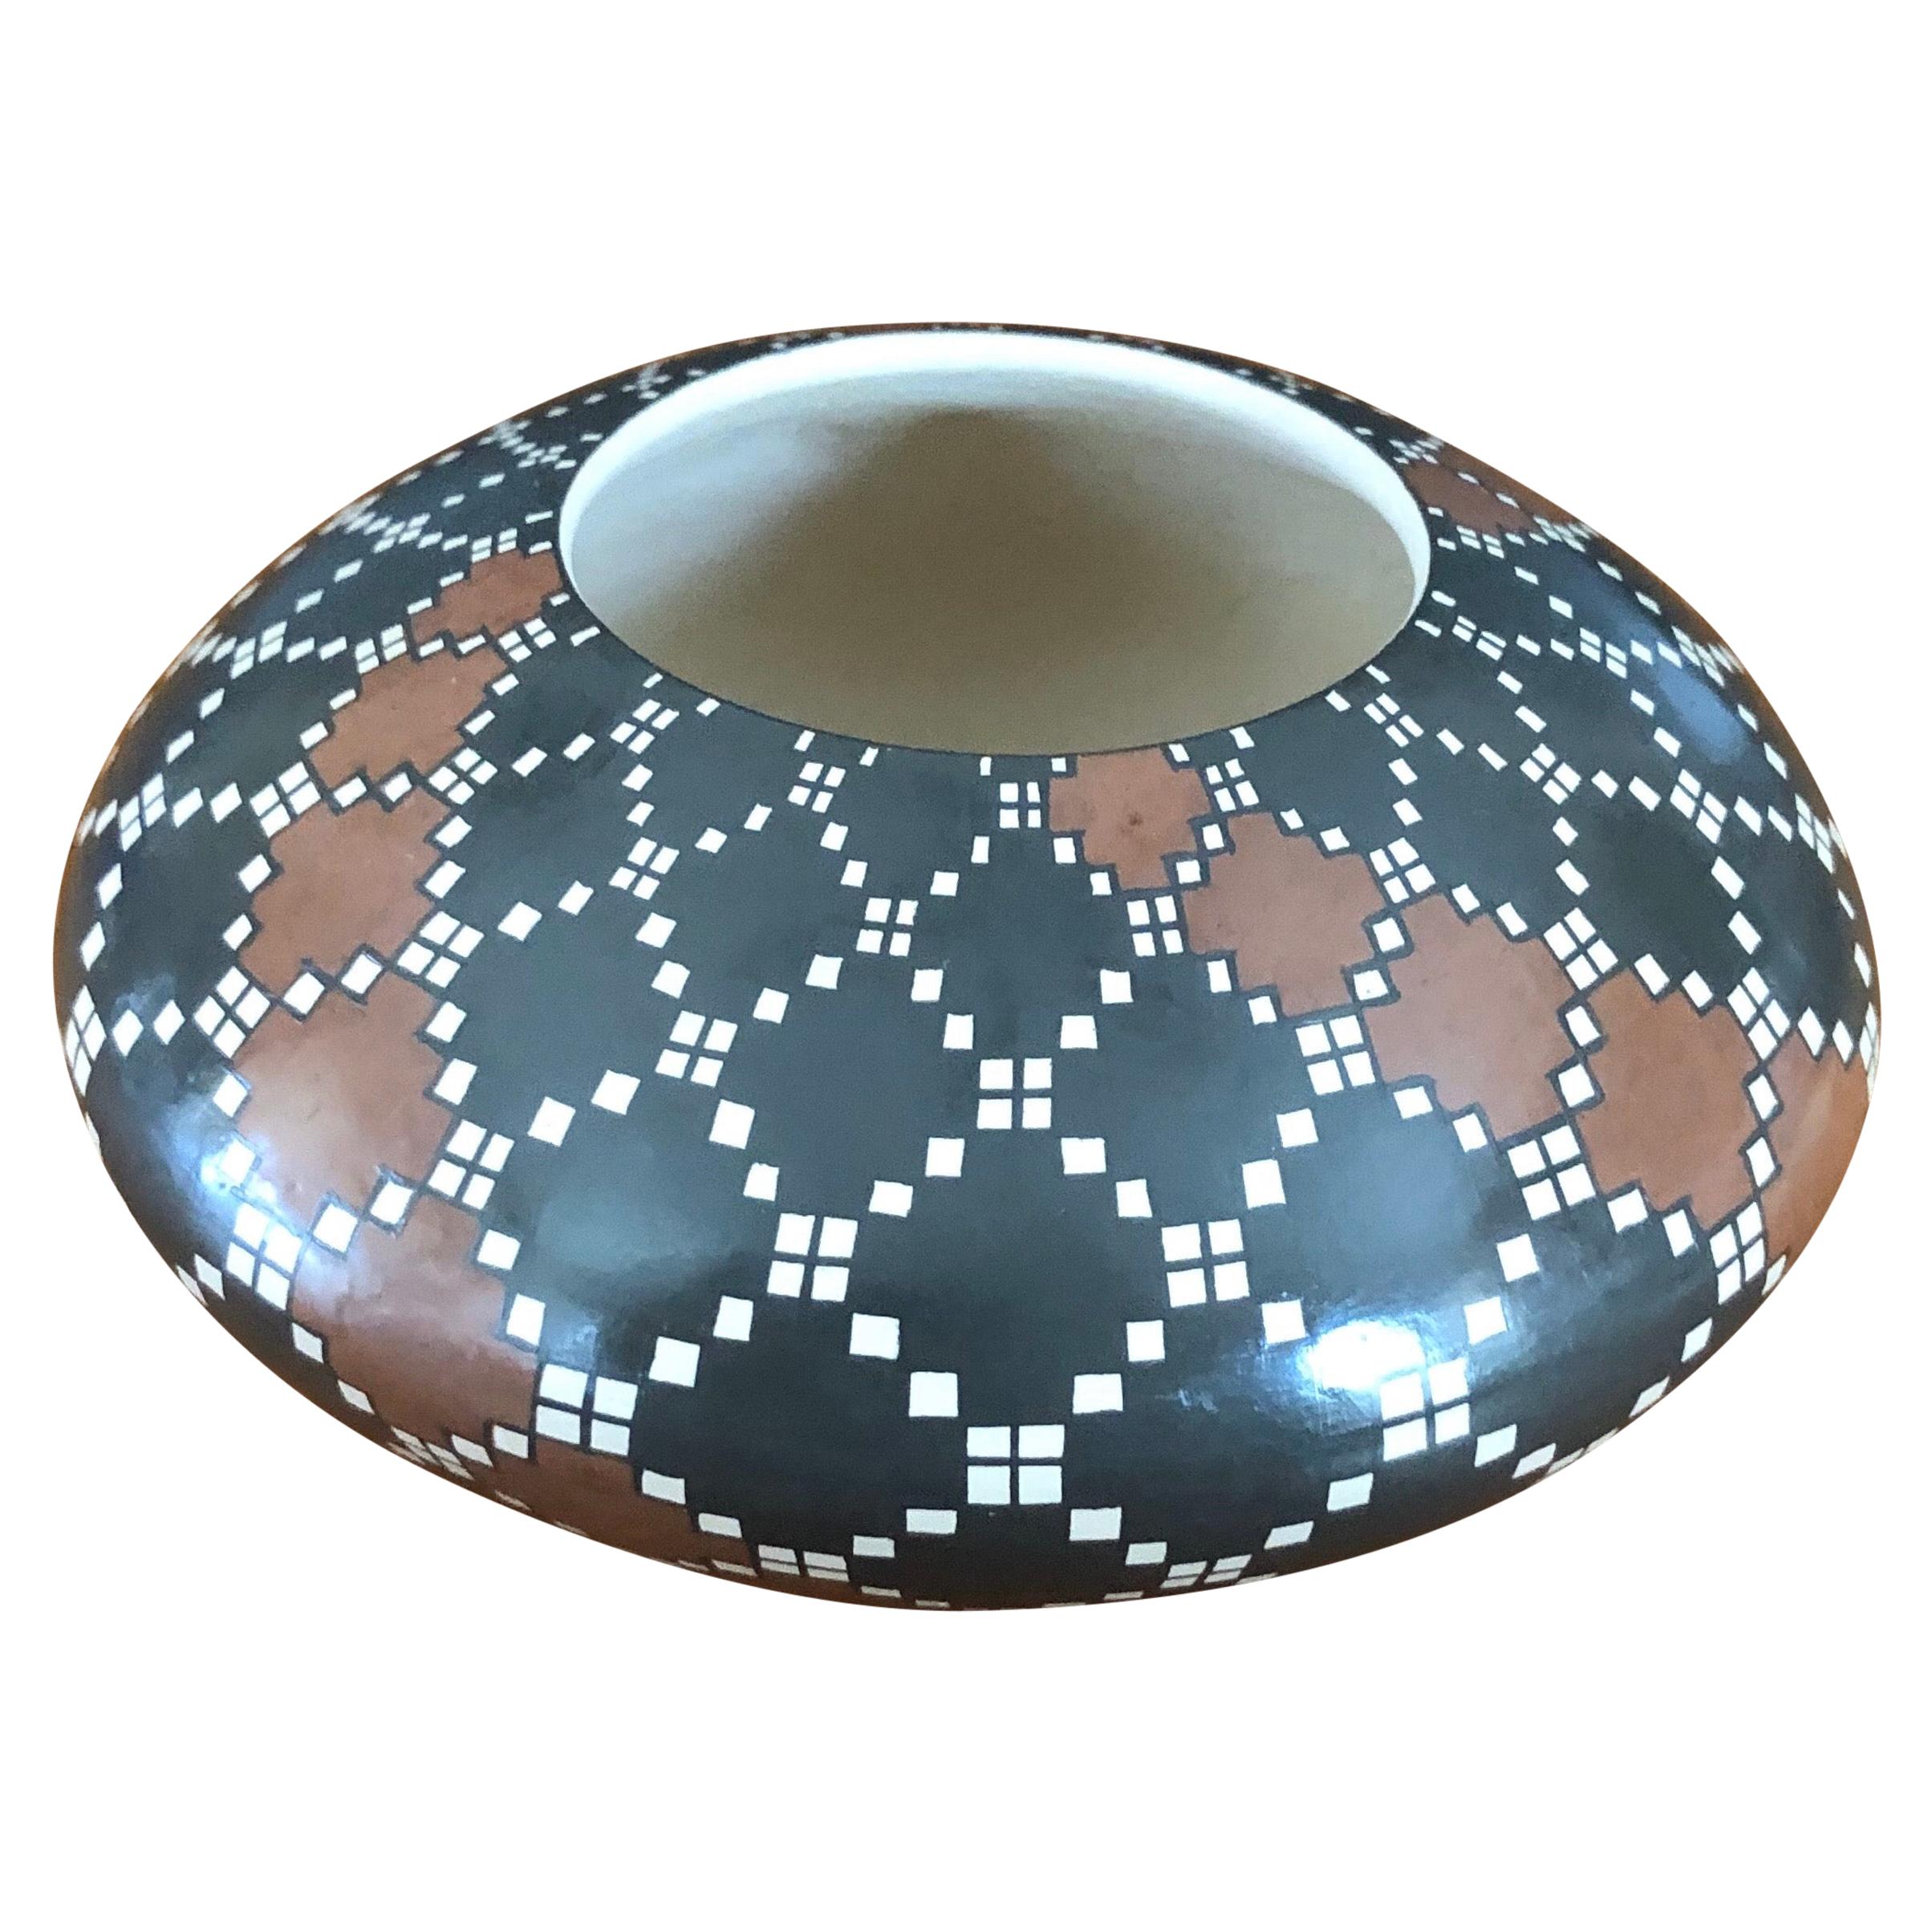 Mata Ortiz Geometric Pottery Vase by Juana Ledezma Vecoz